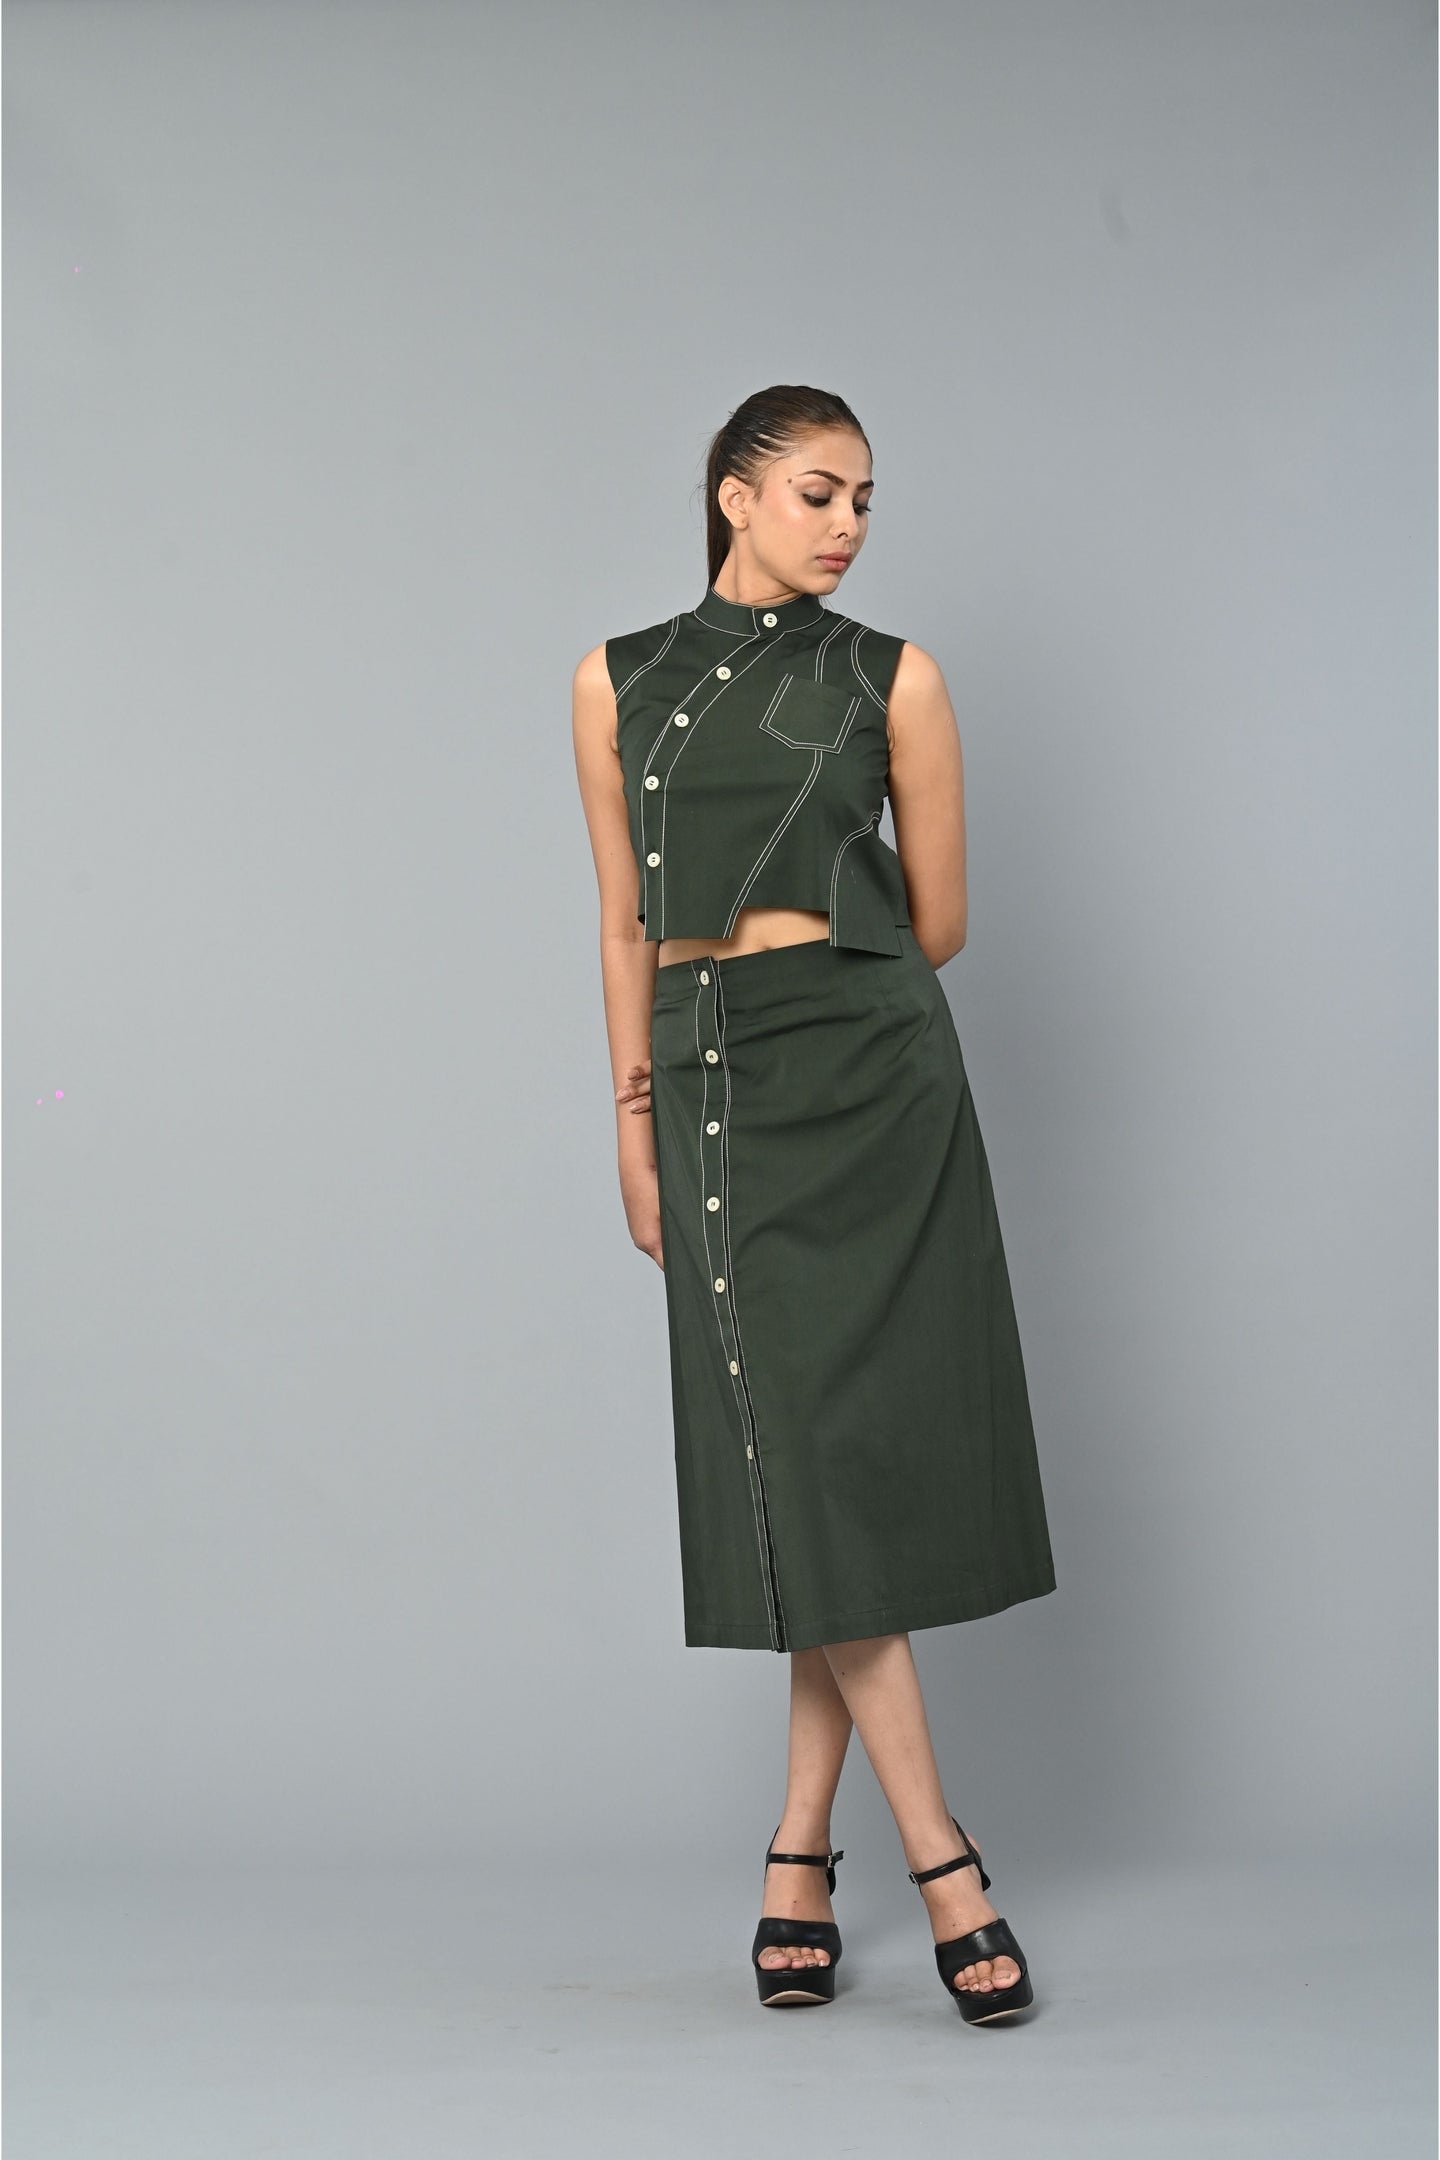 Asymmetrical top with skirt